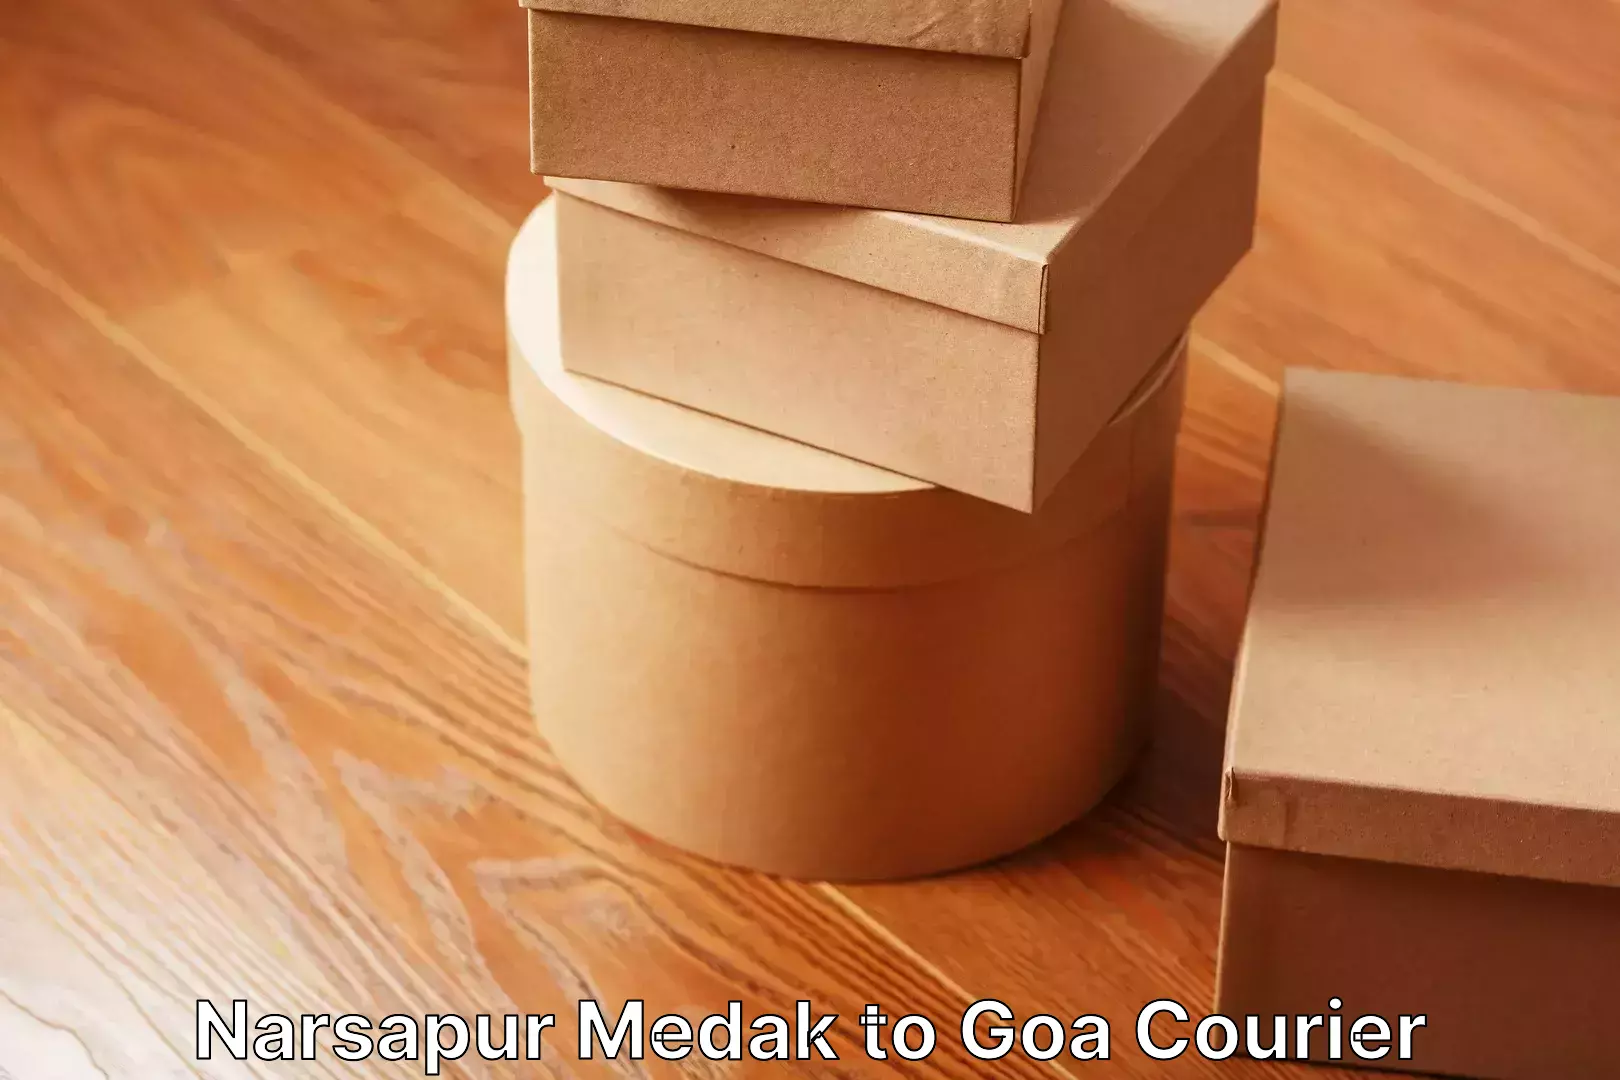 Professional moving assistance Narsapur Medak to Goa